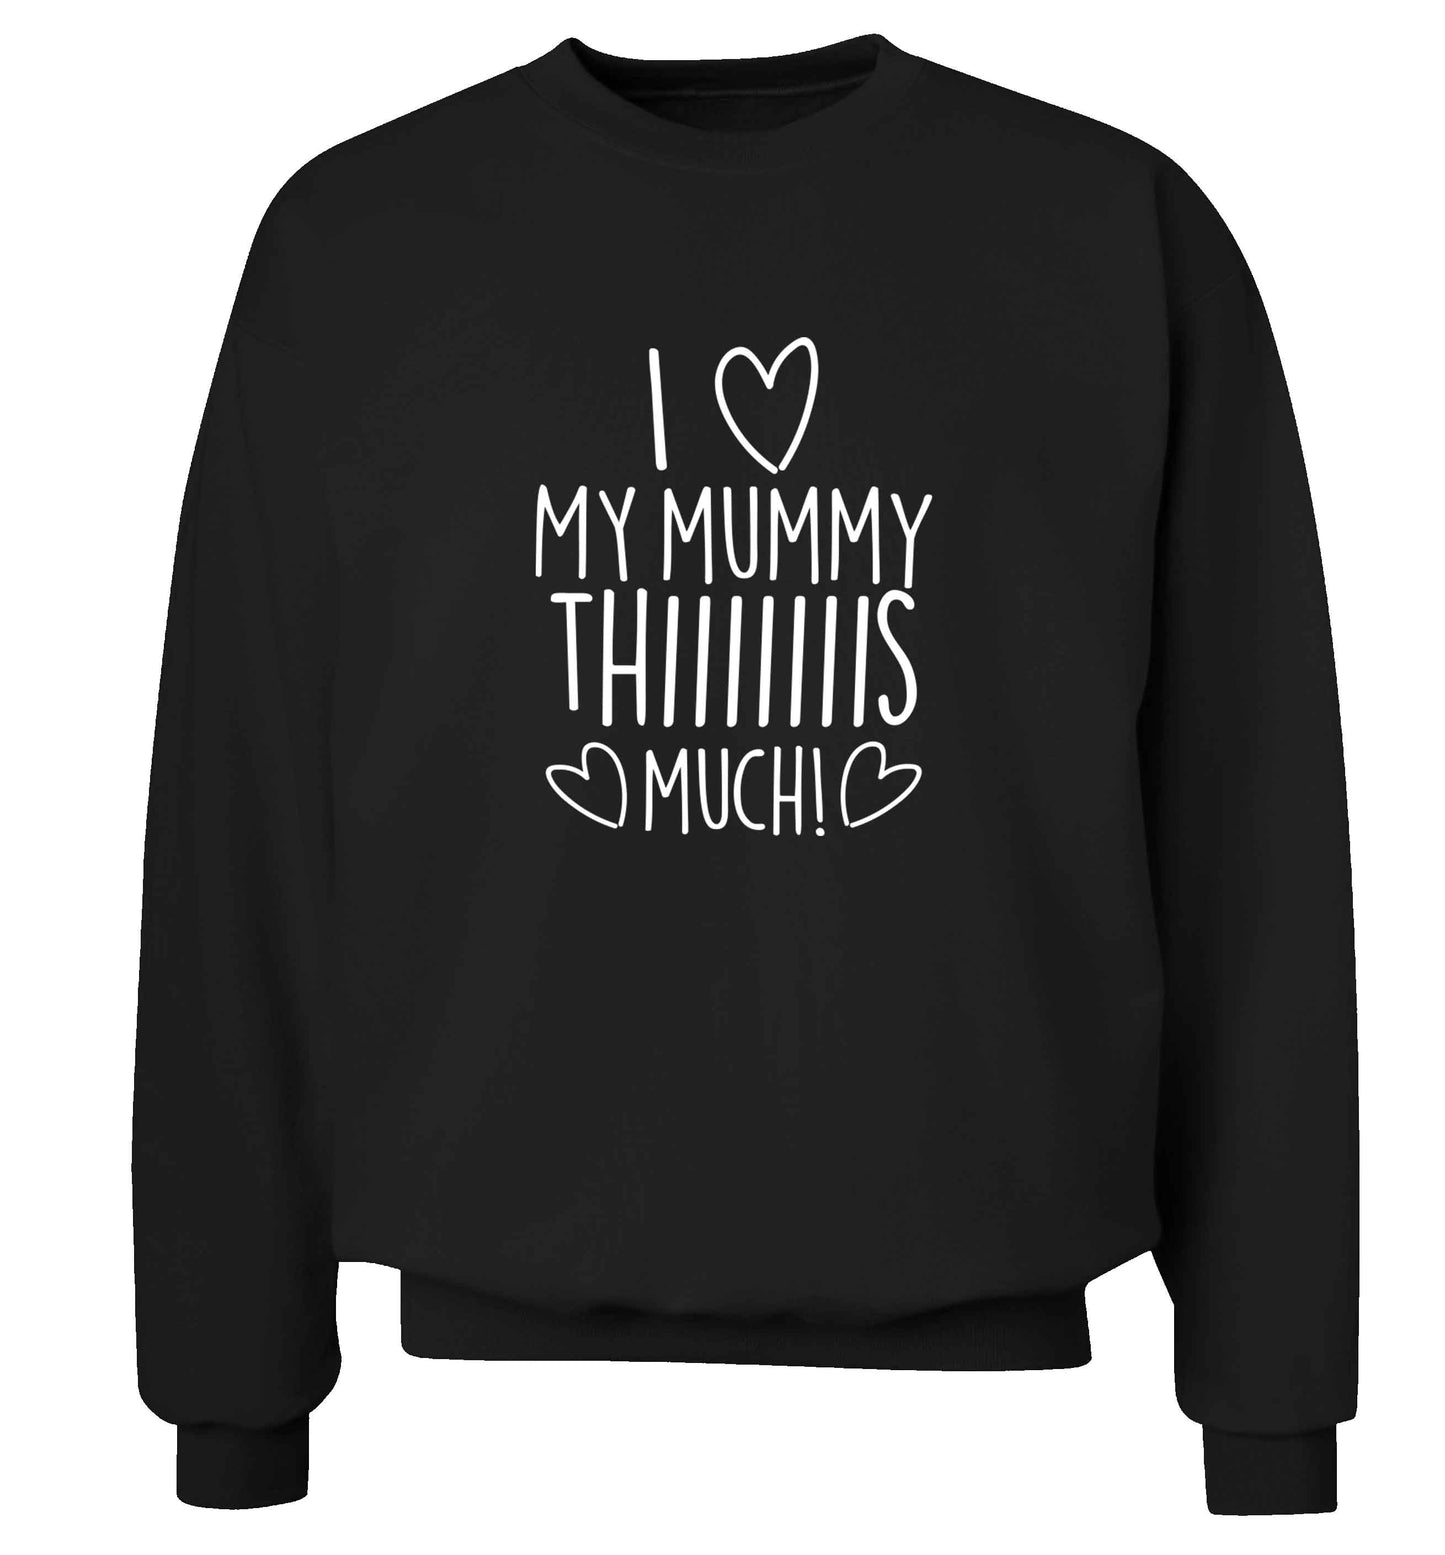 I love my mummy thiiiiis much! adult's unisex black sweater 2XL